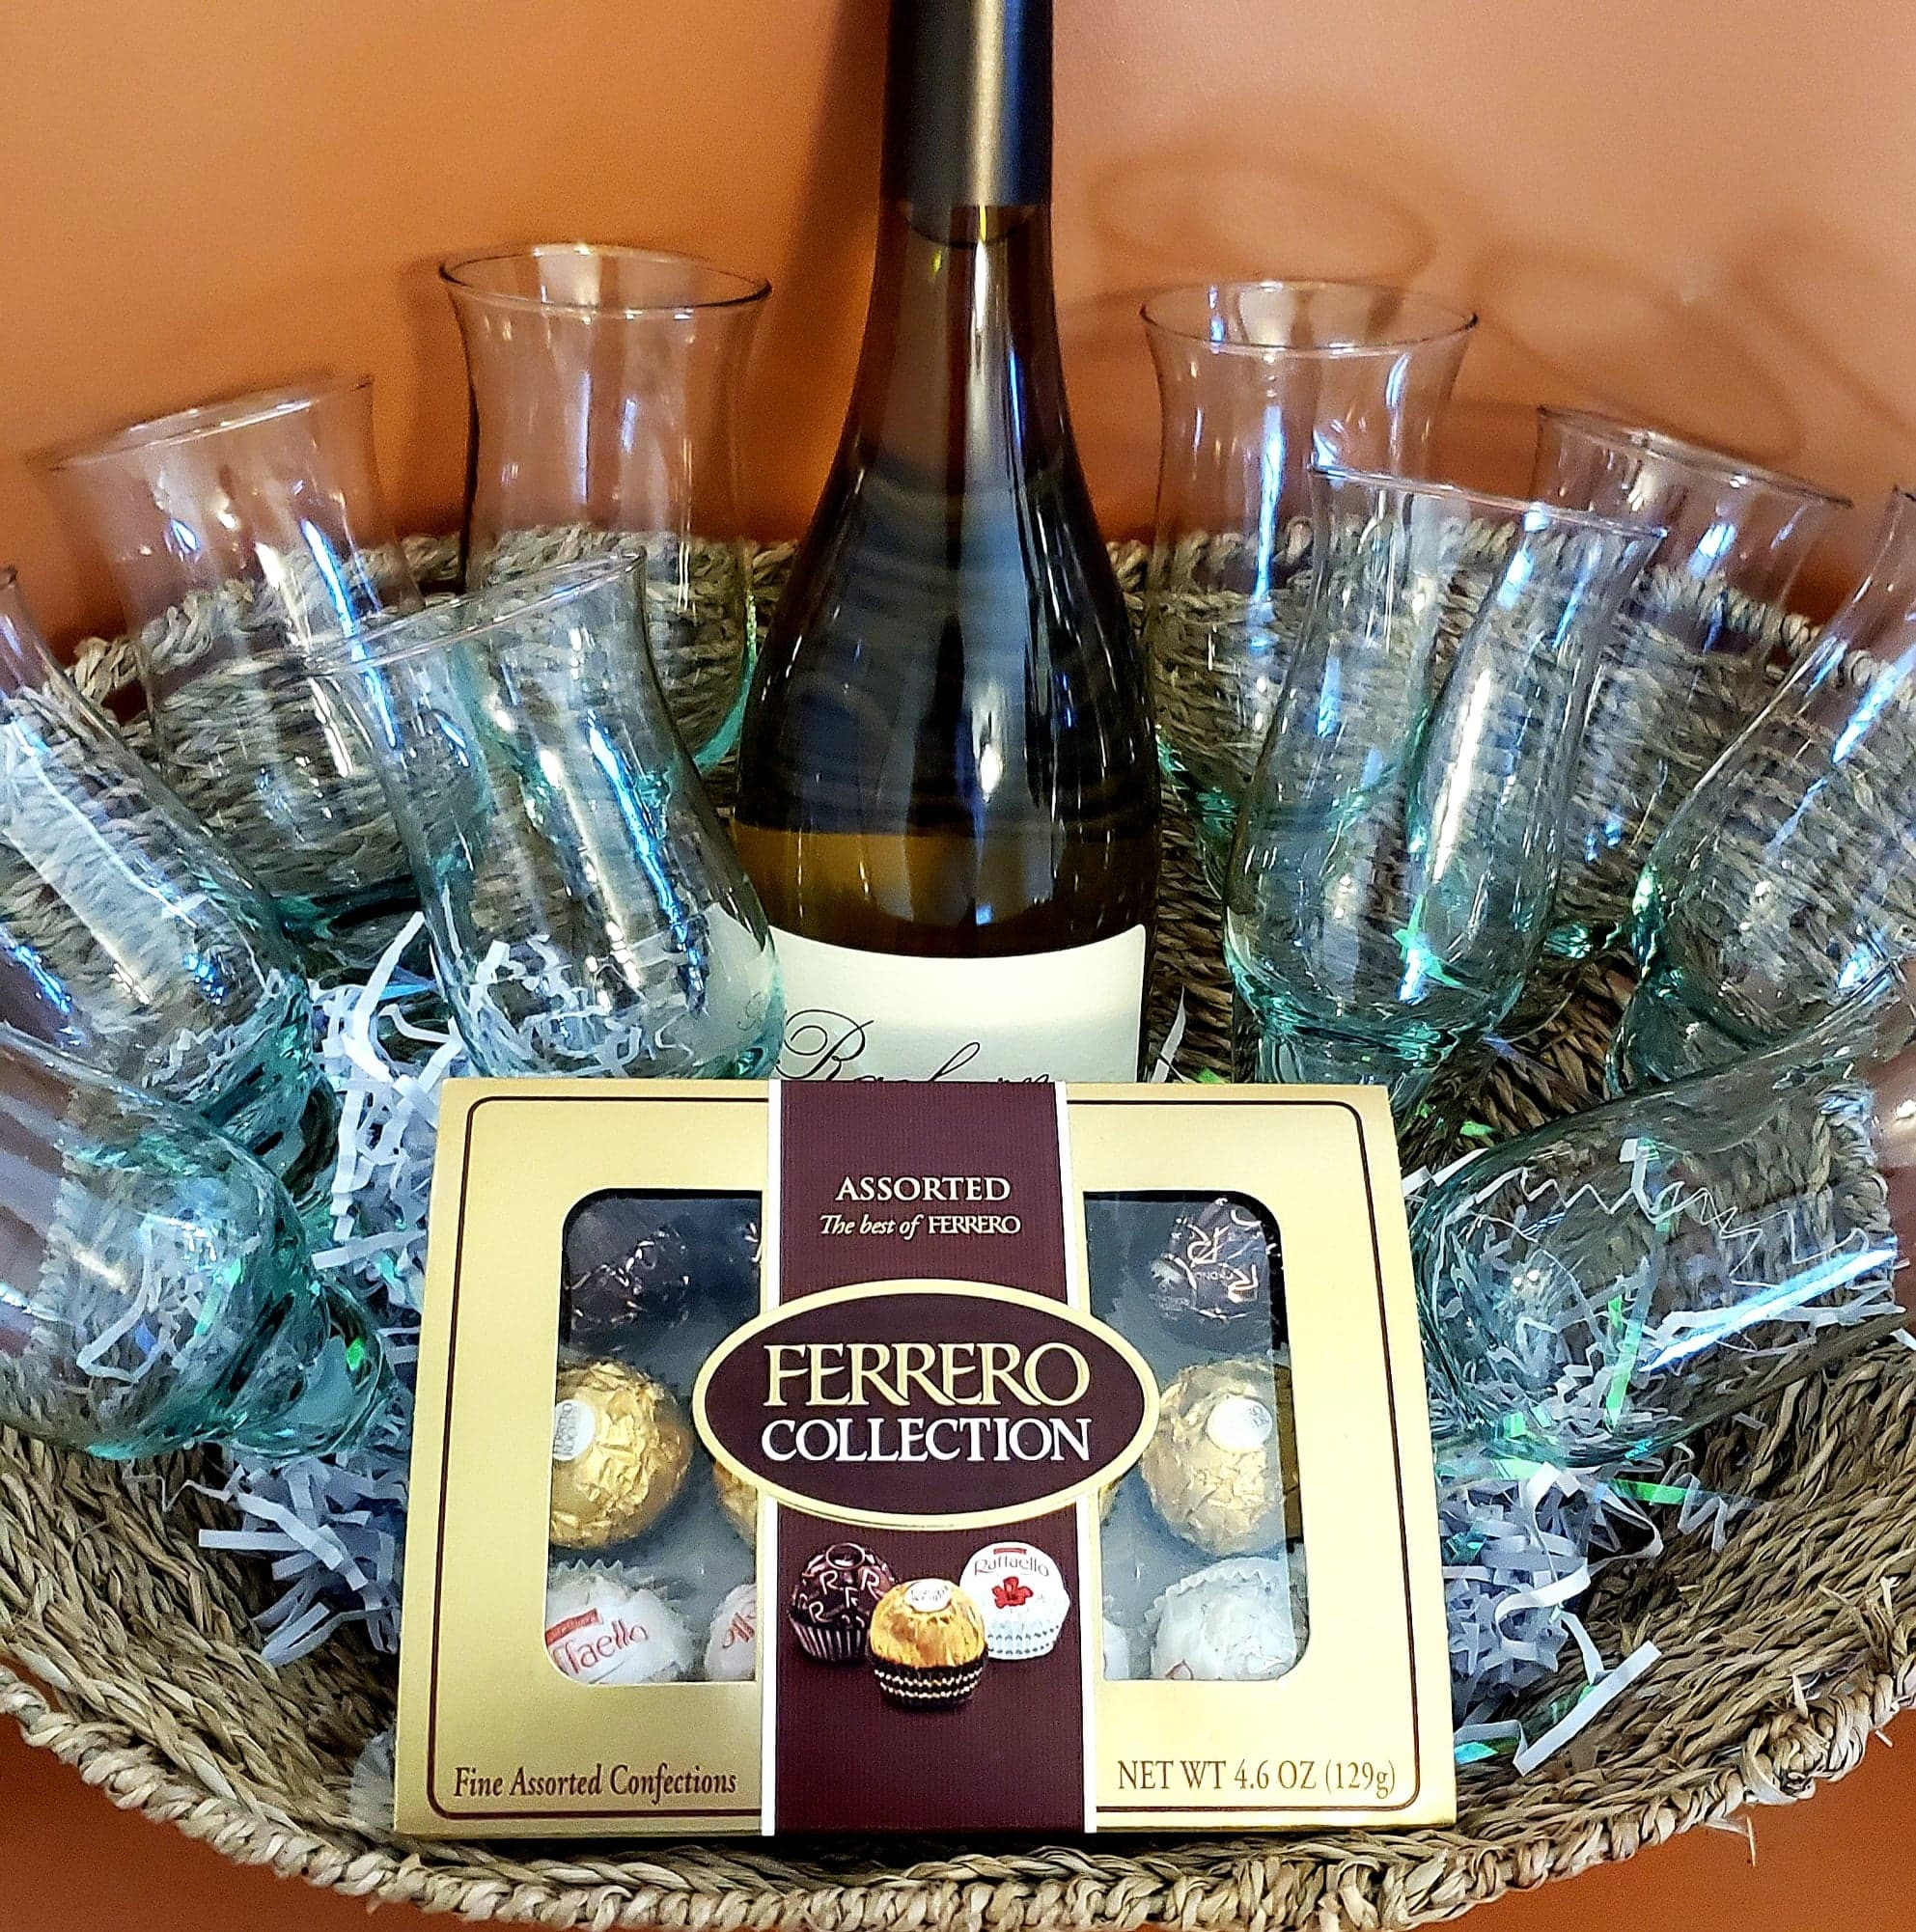 10 clear glass Pier-1 Imports wine glasses, 1 bottle of Chardonnay 2017, 1 box Ferrero Chocolates